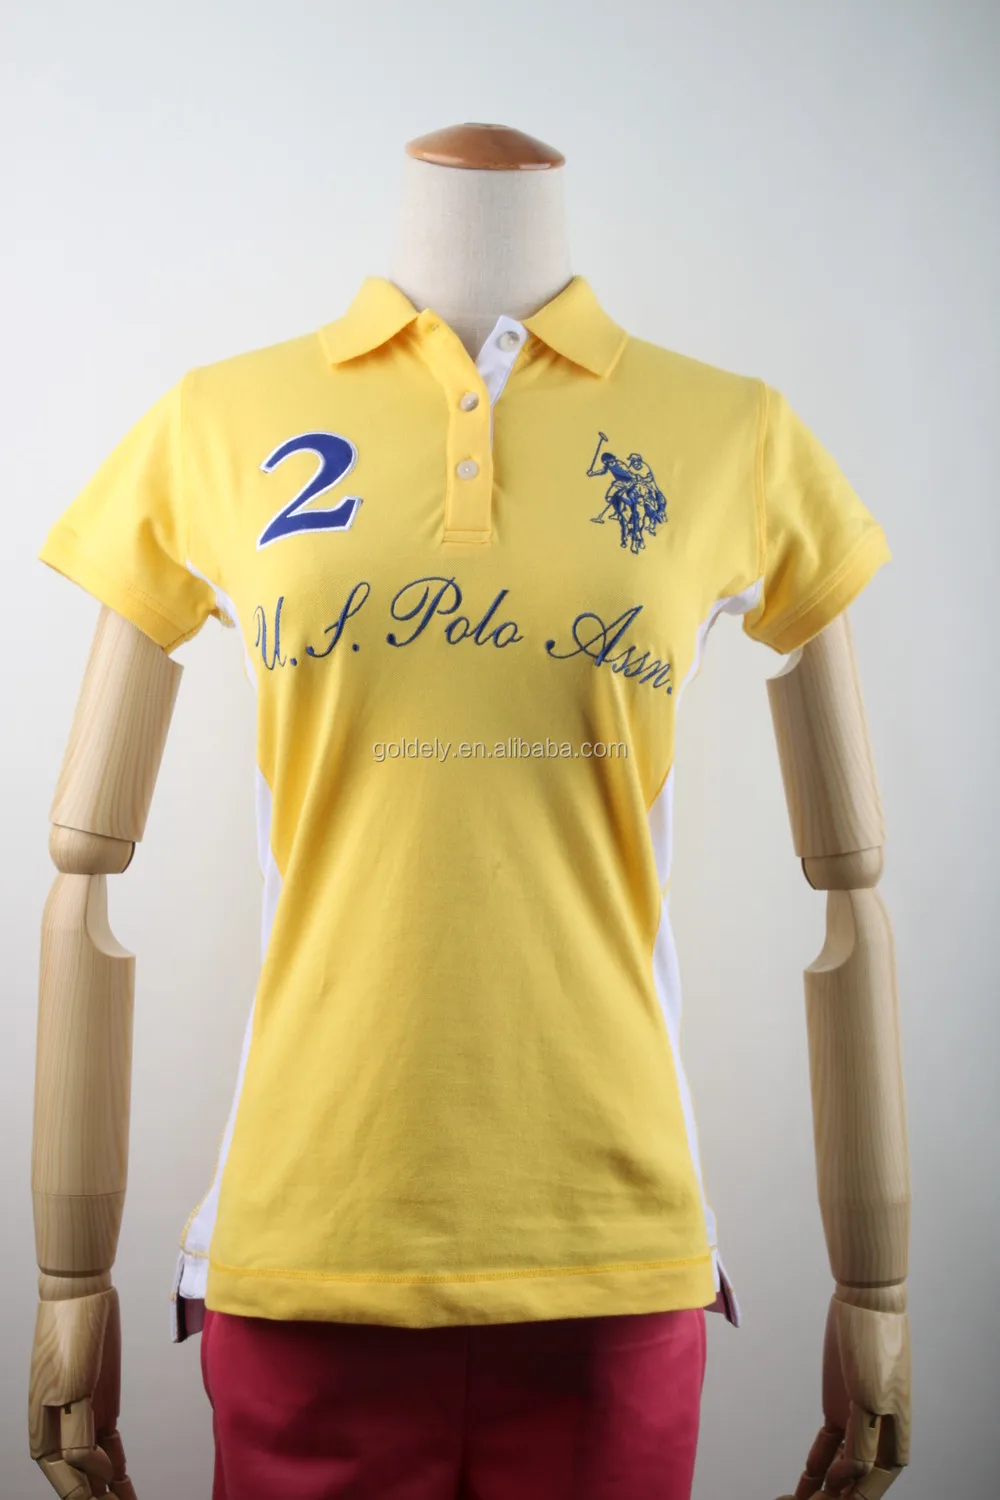 women's polo shirts on sale